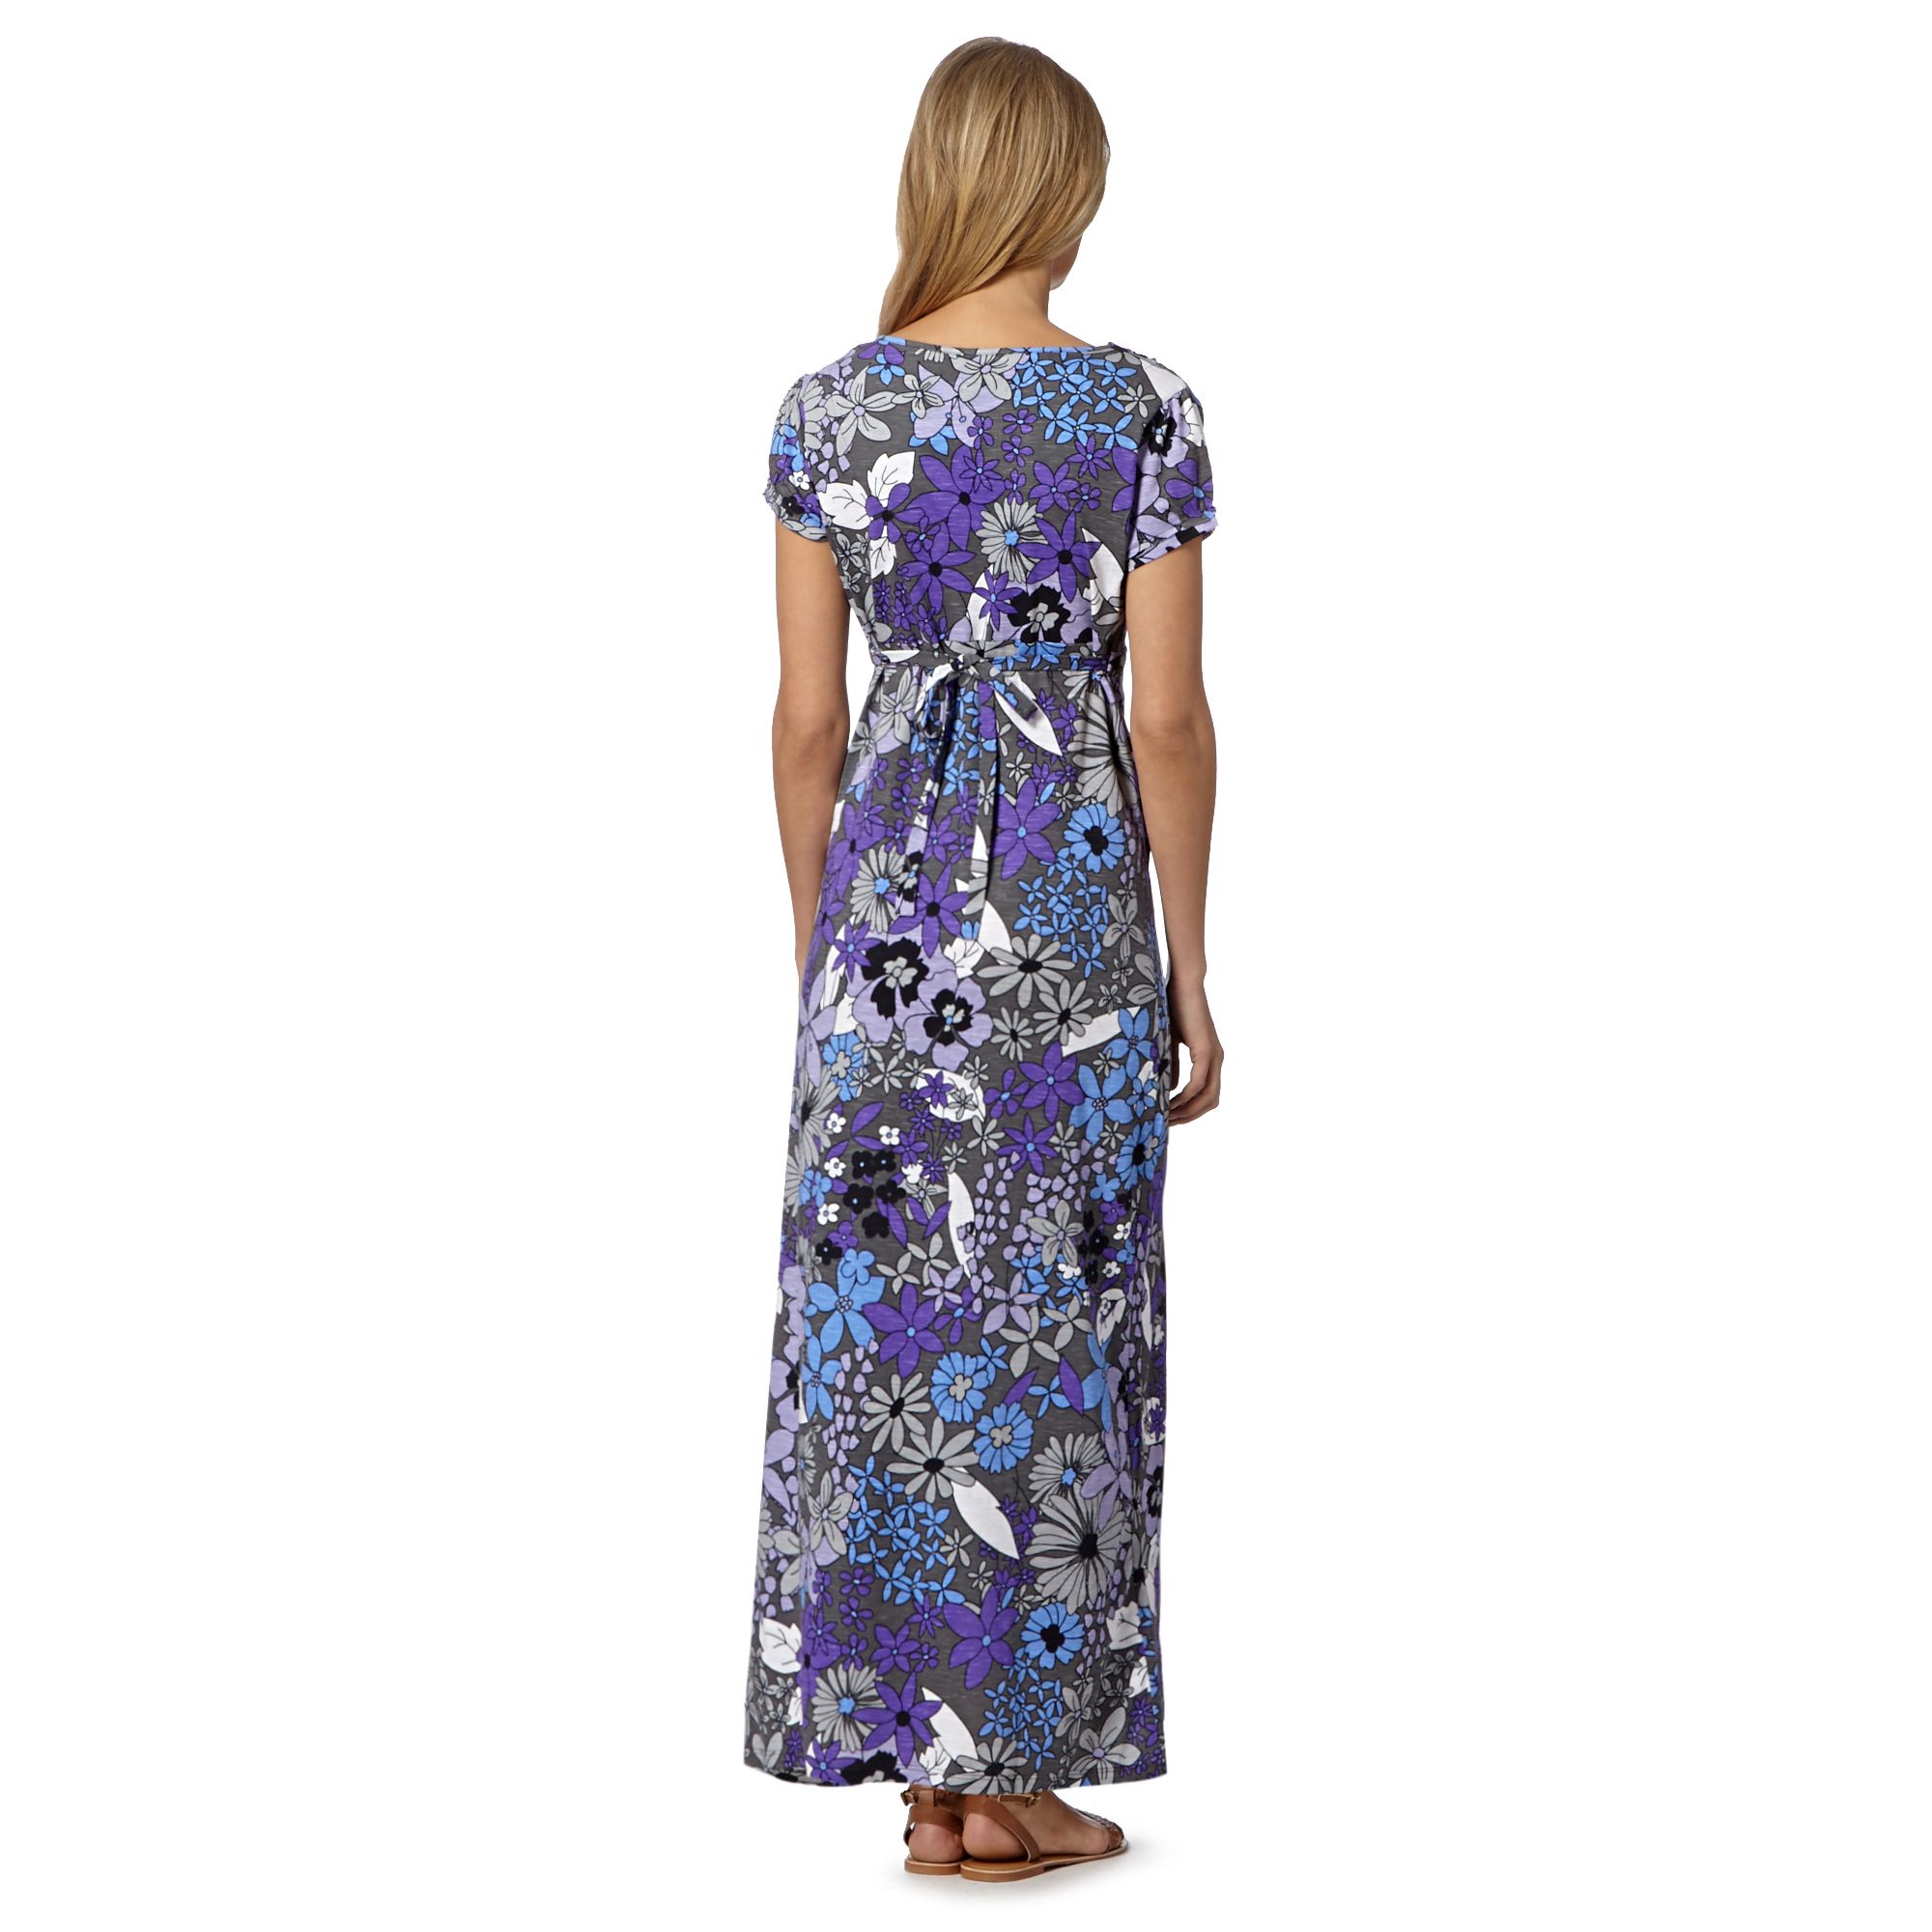 Mantaray Purple Floral Self Tie Maxi Dress From Debenhams | eBay